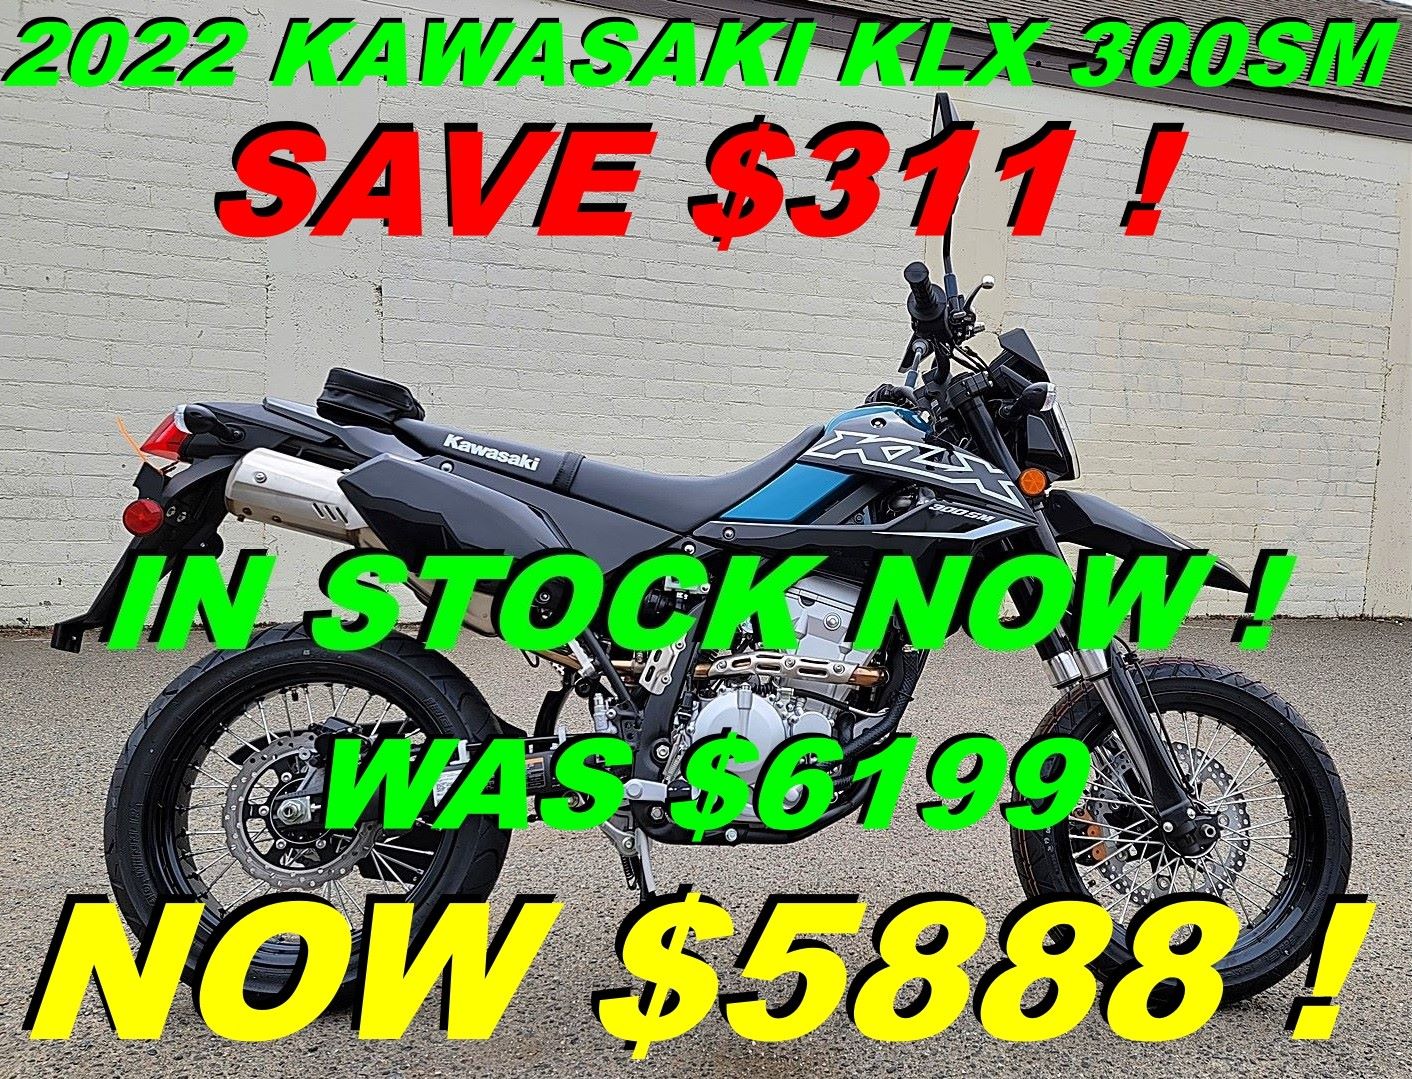 2022 Kawasaki KLX 300SM in Salinas, California - Photo 1